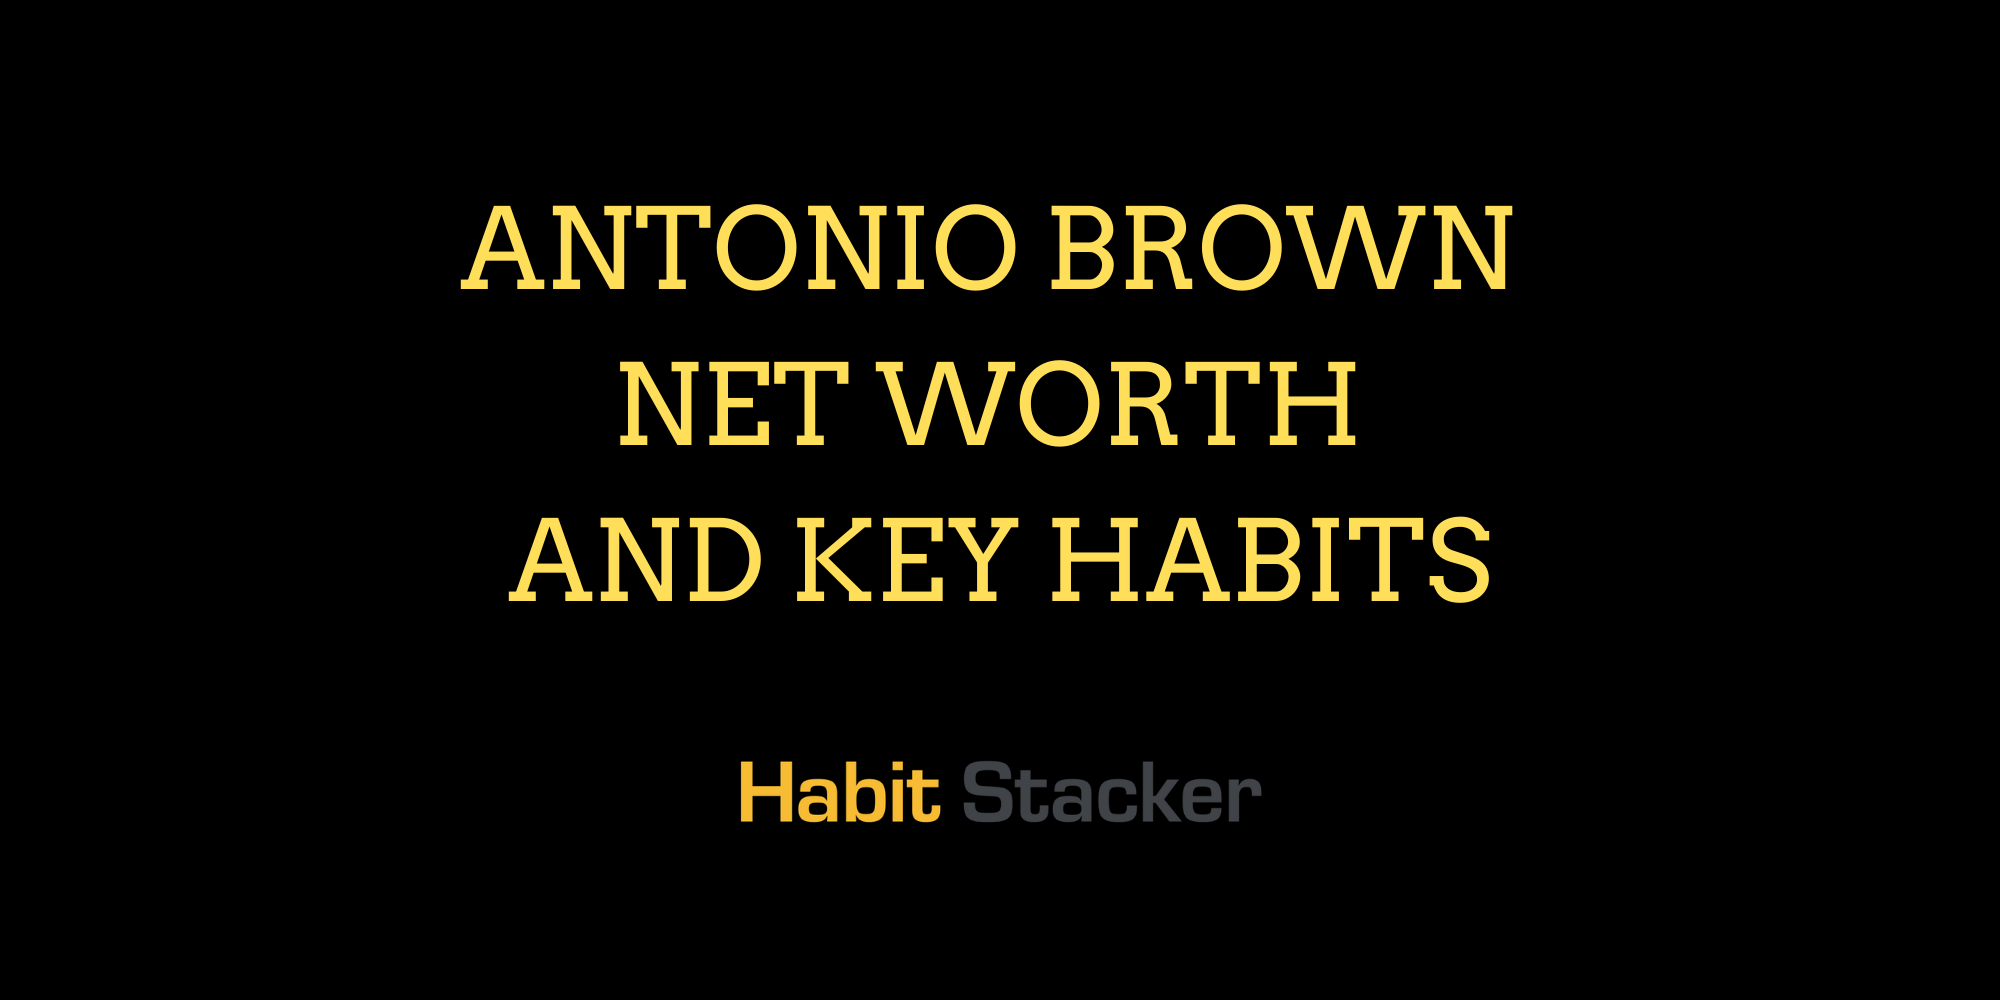 Antonio Brown Net Worth and Key Habits